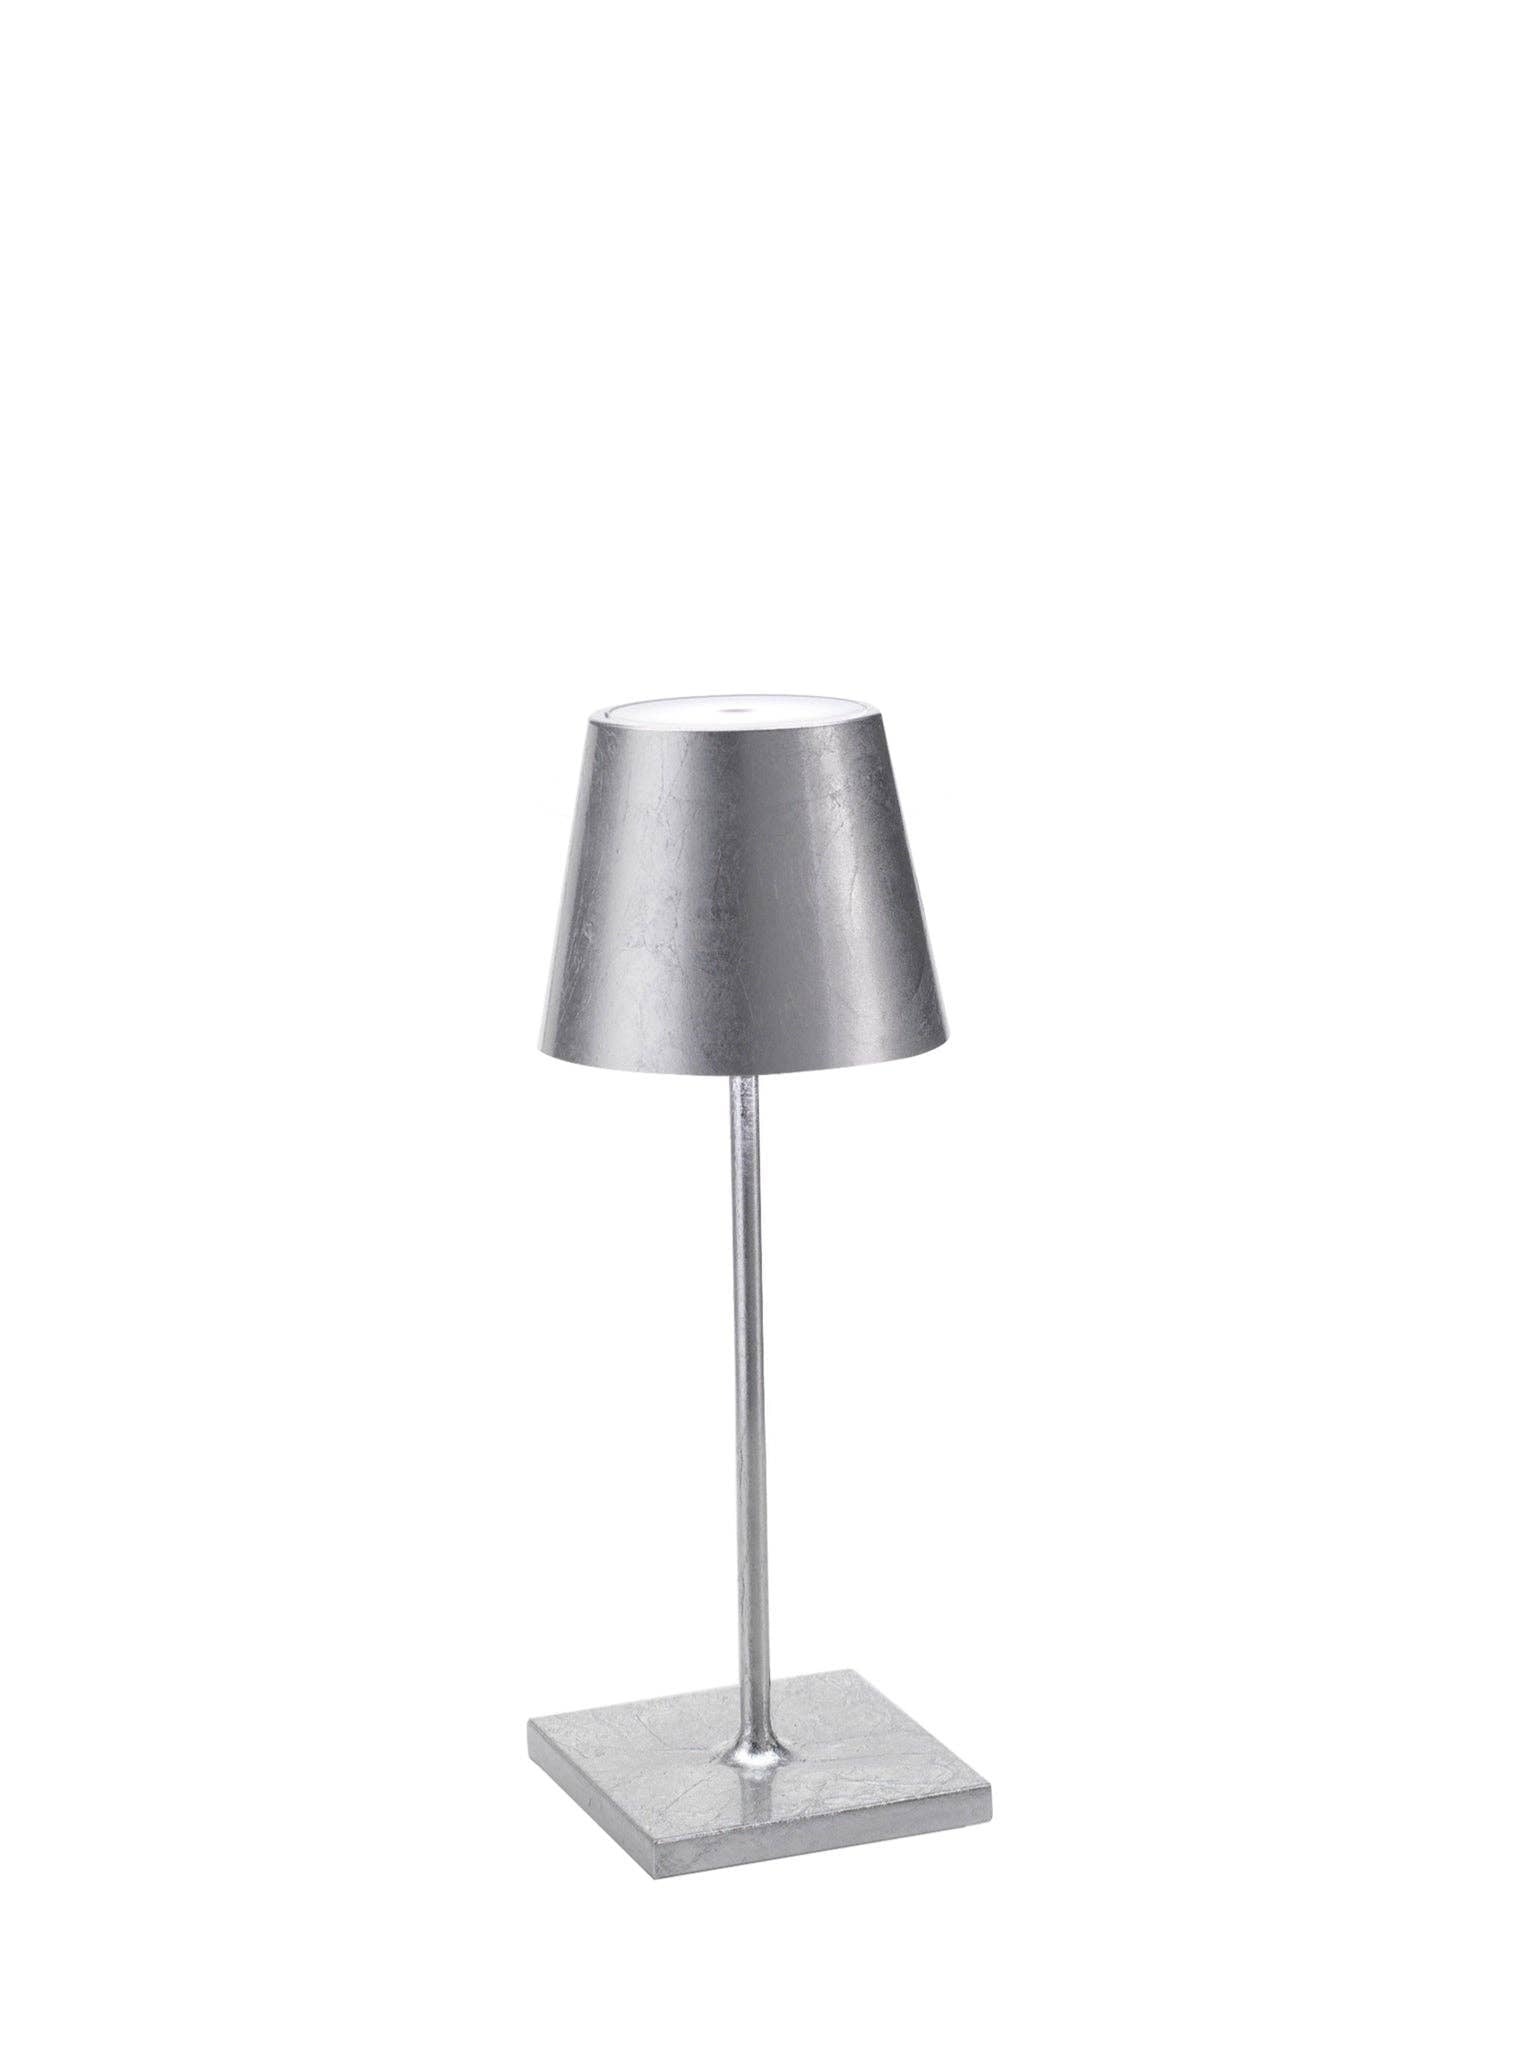 Poldina Pro Mini Lamp - Sage